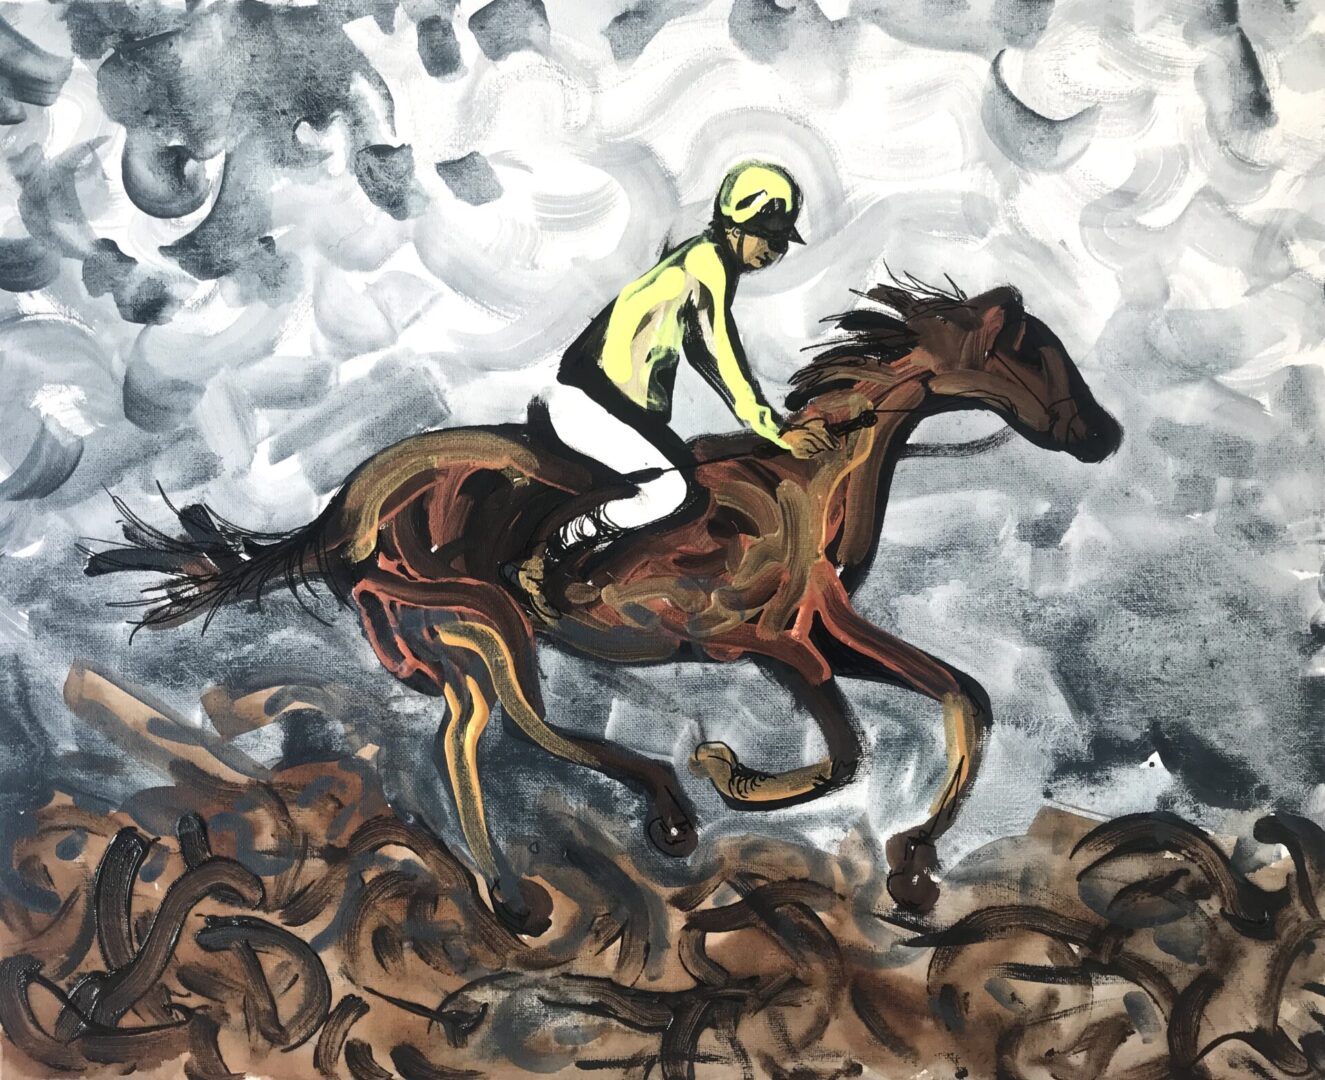 Oil painting of a Jockey rider